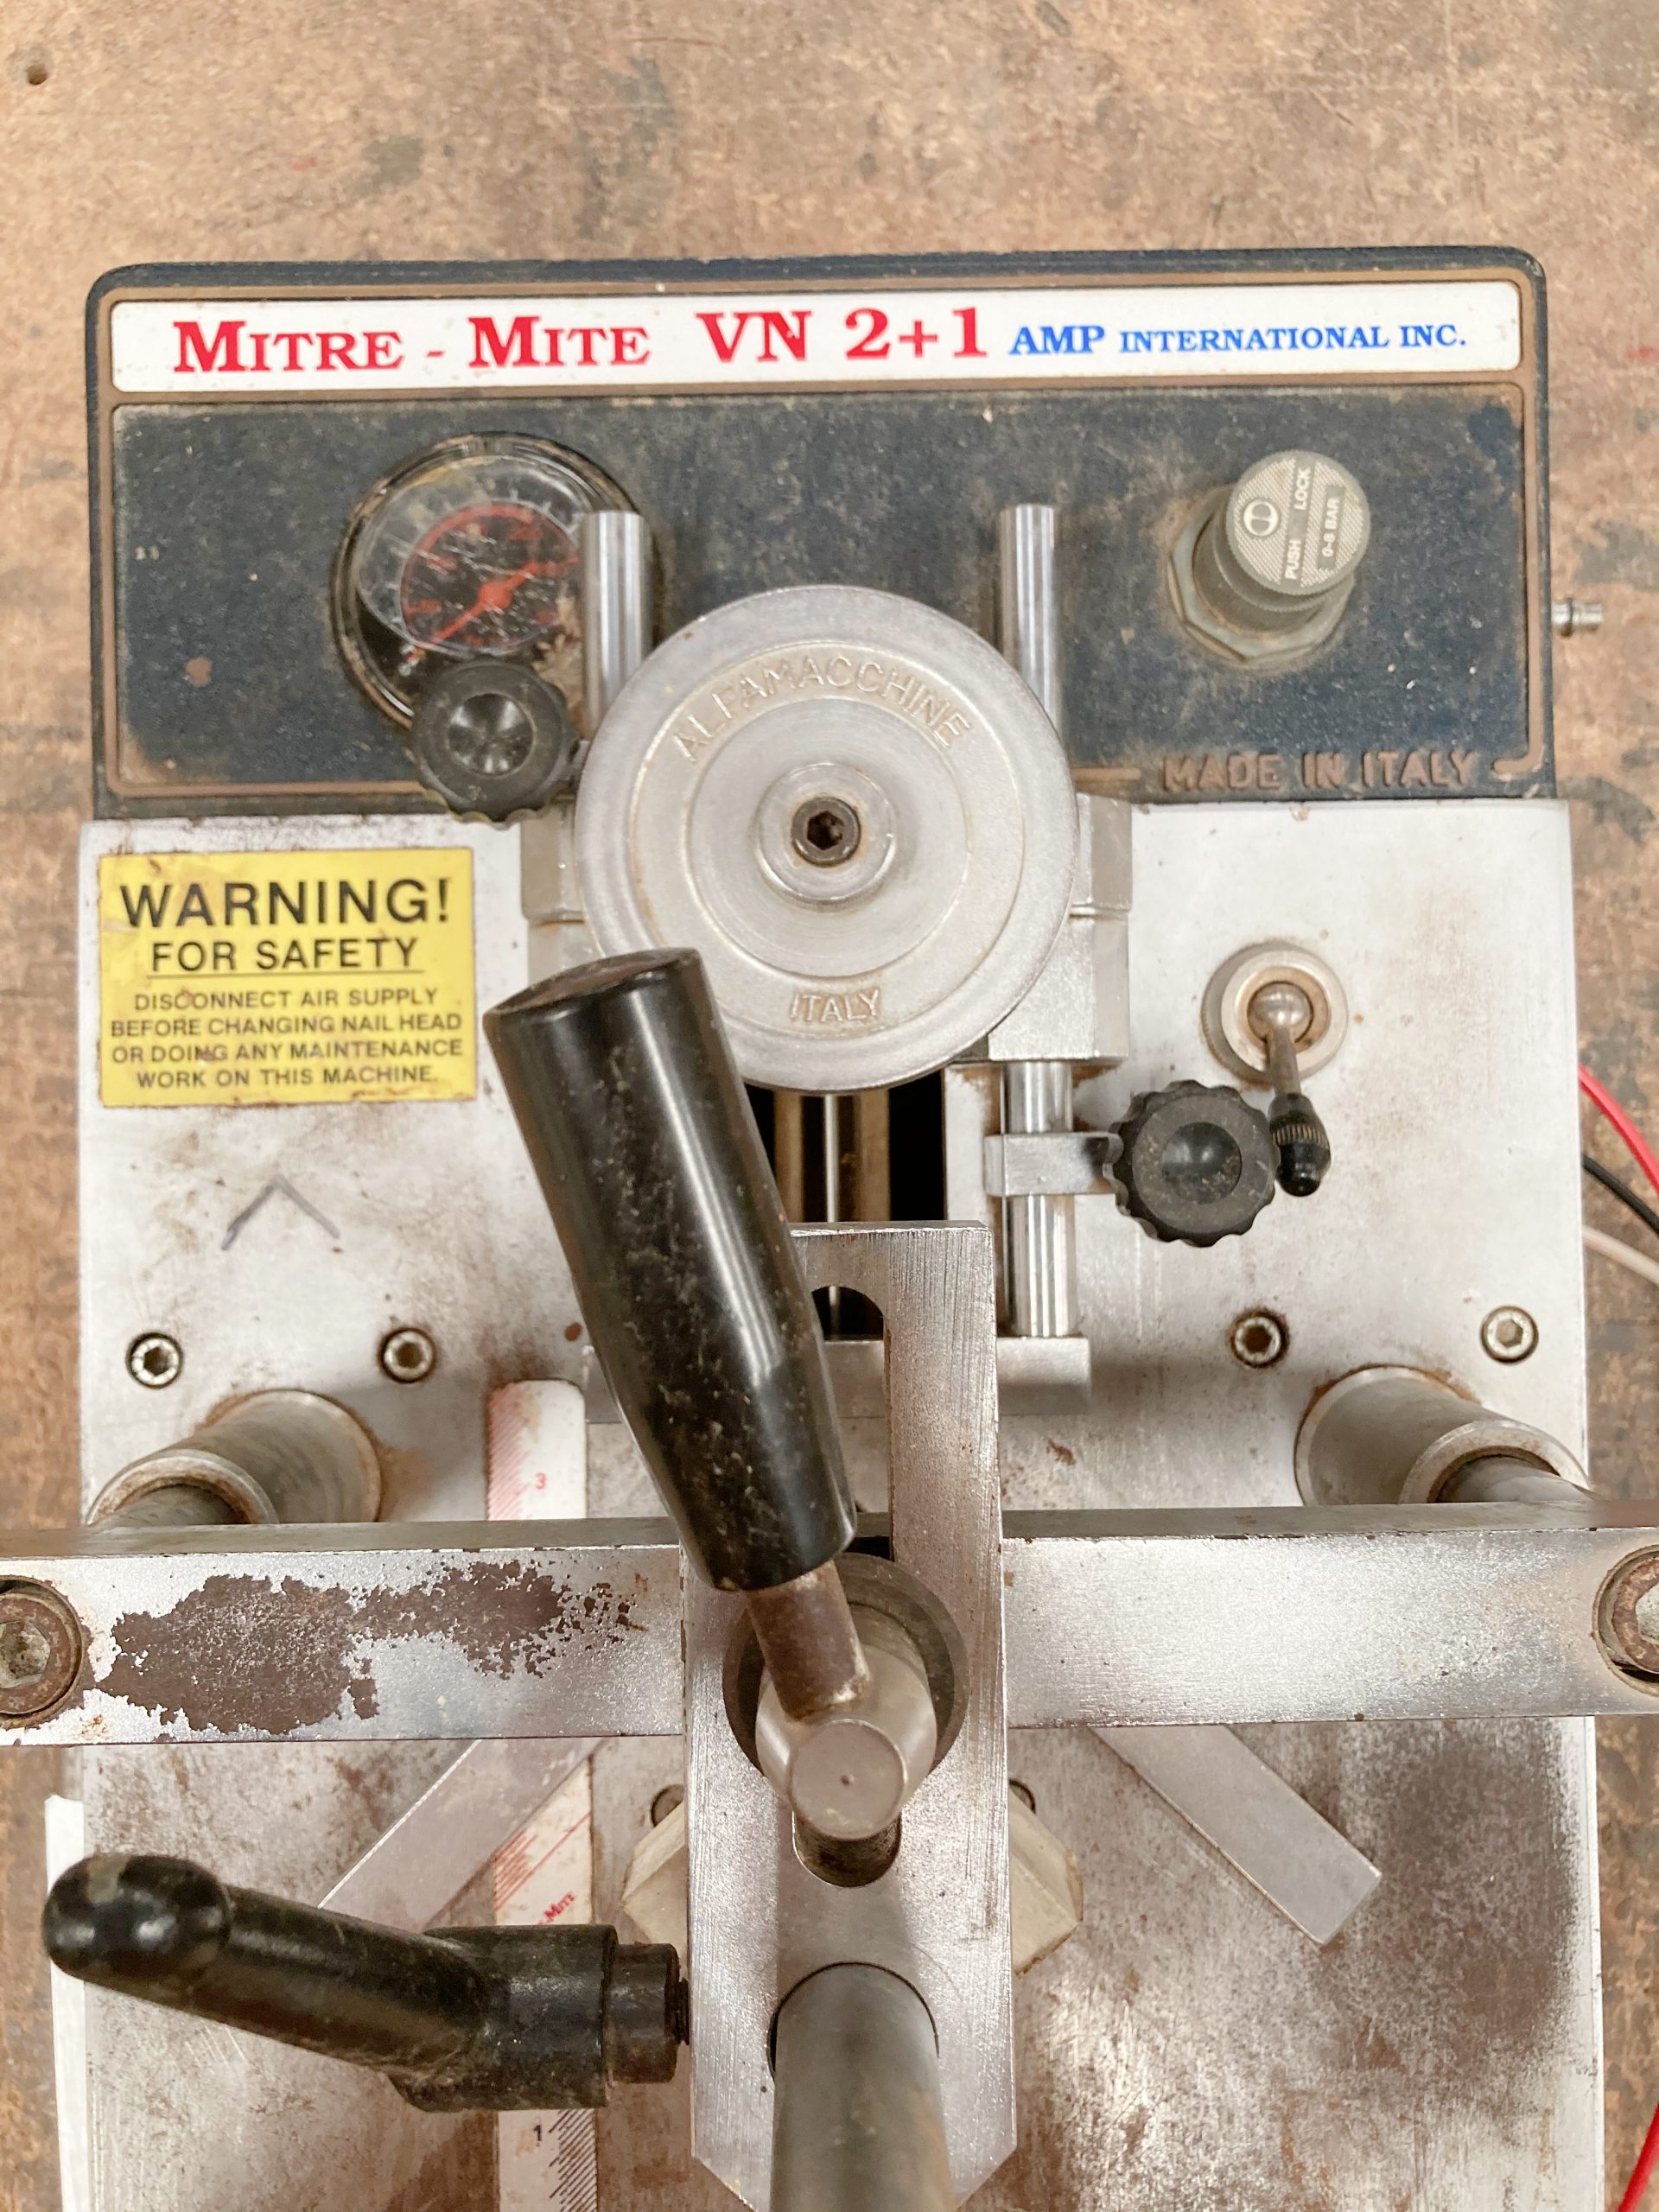 Equipment Lot: Mitre Mite VN4+E3 Joiner & Mitre Mite VN2+1 Vnailer (used) Item # UE-070821A (Texas)